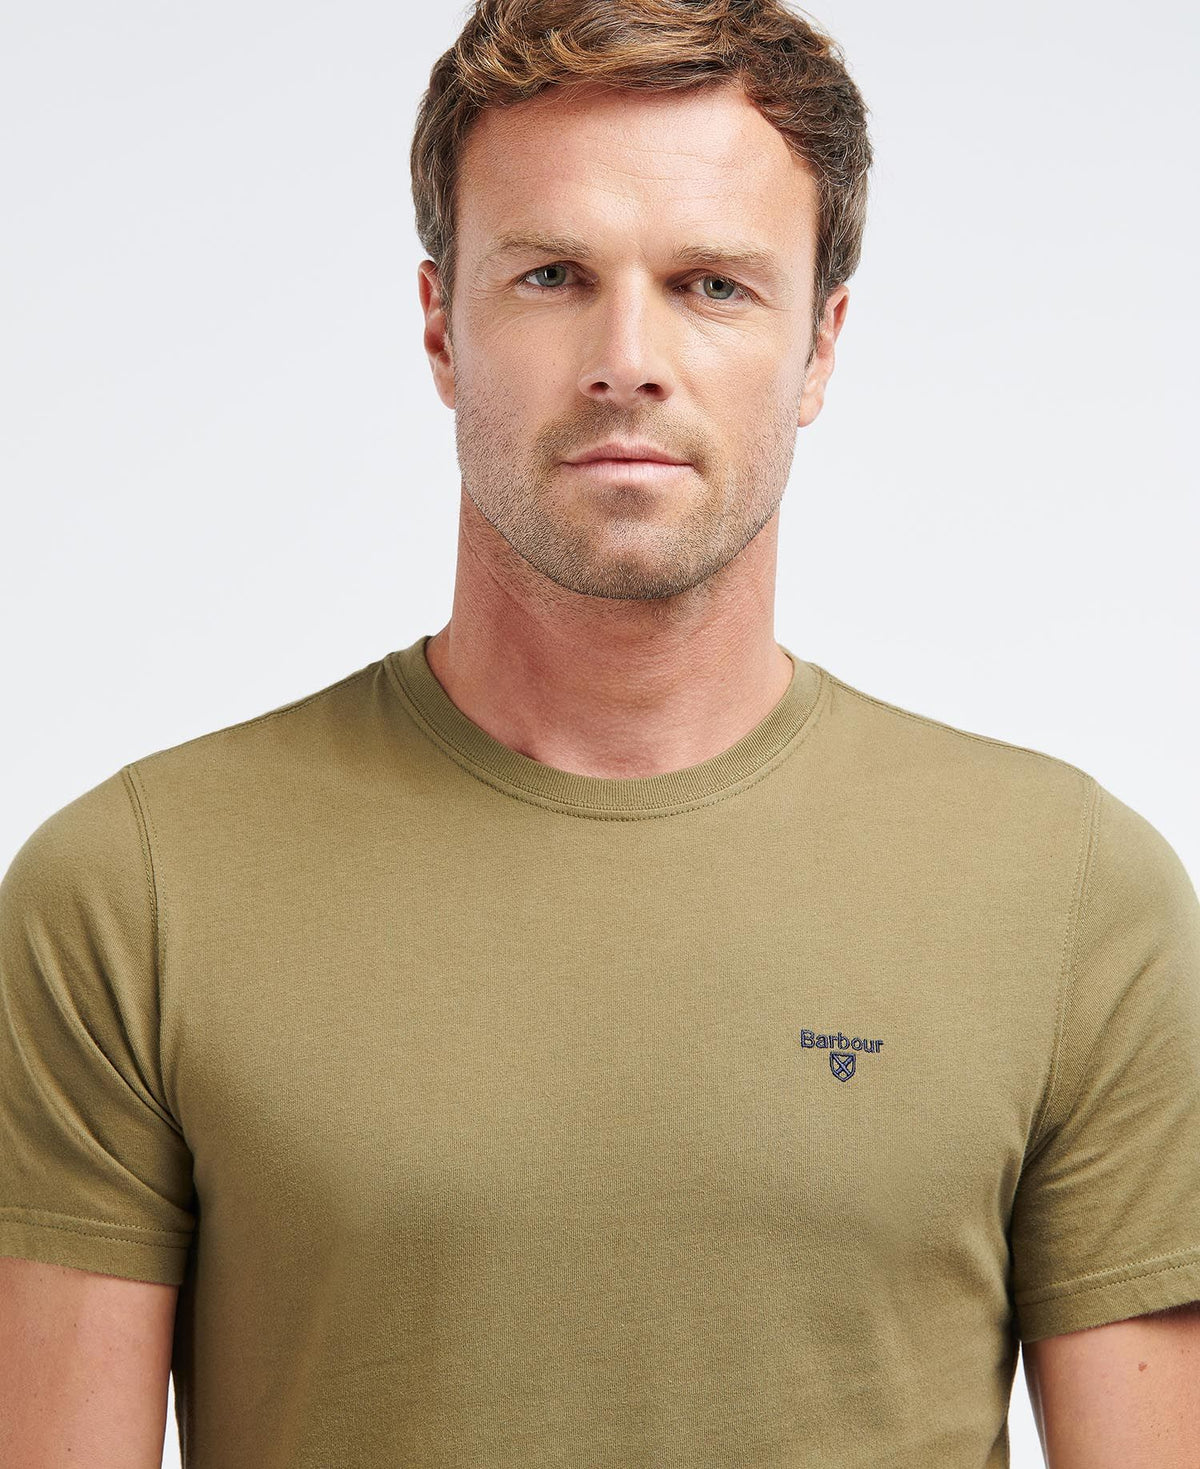 Barbour Men's Sports T-Shirt - Short Sleeved, 02, Mts0331, Mid Olive